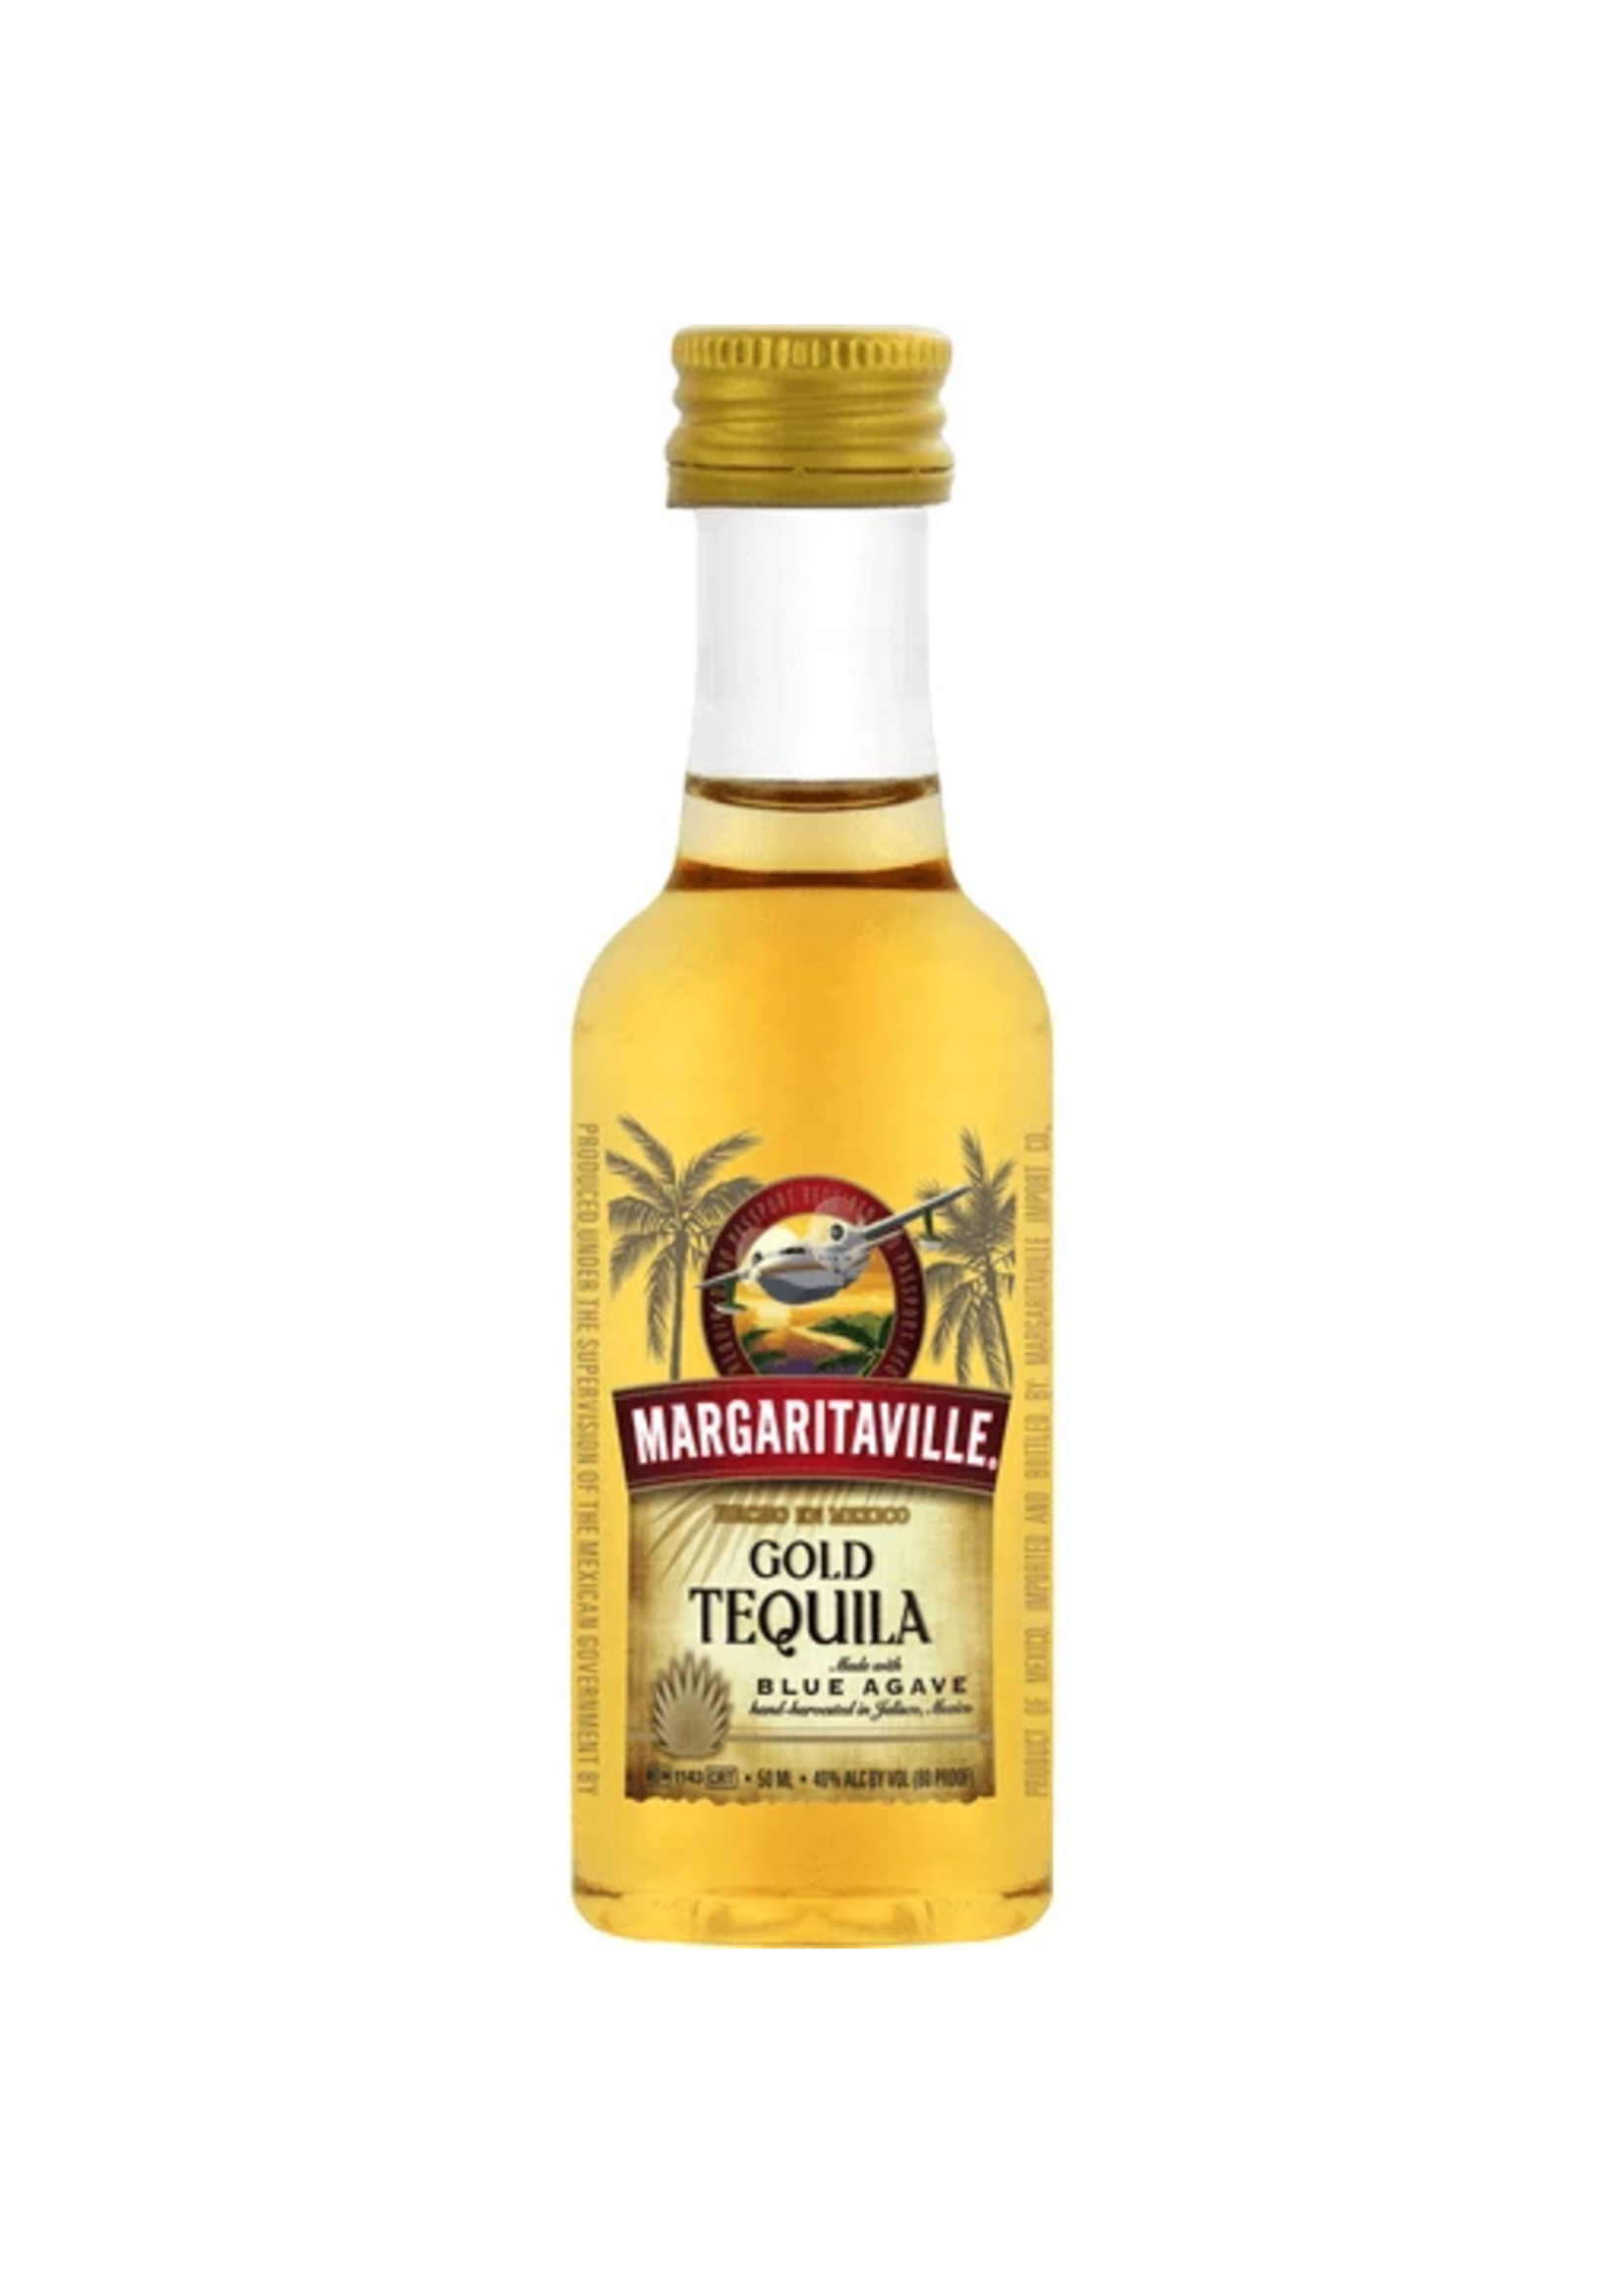 Margaritaville Gold Tequila 80Proof Pet 50ml